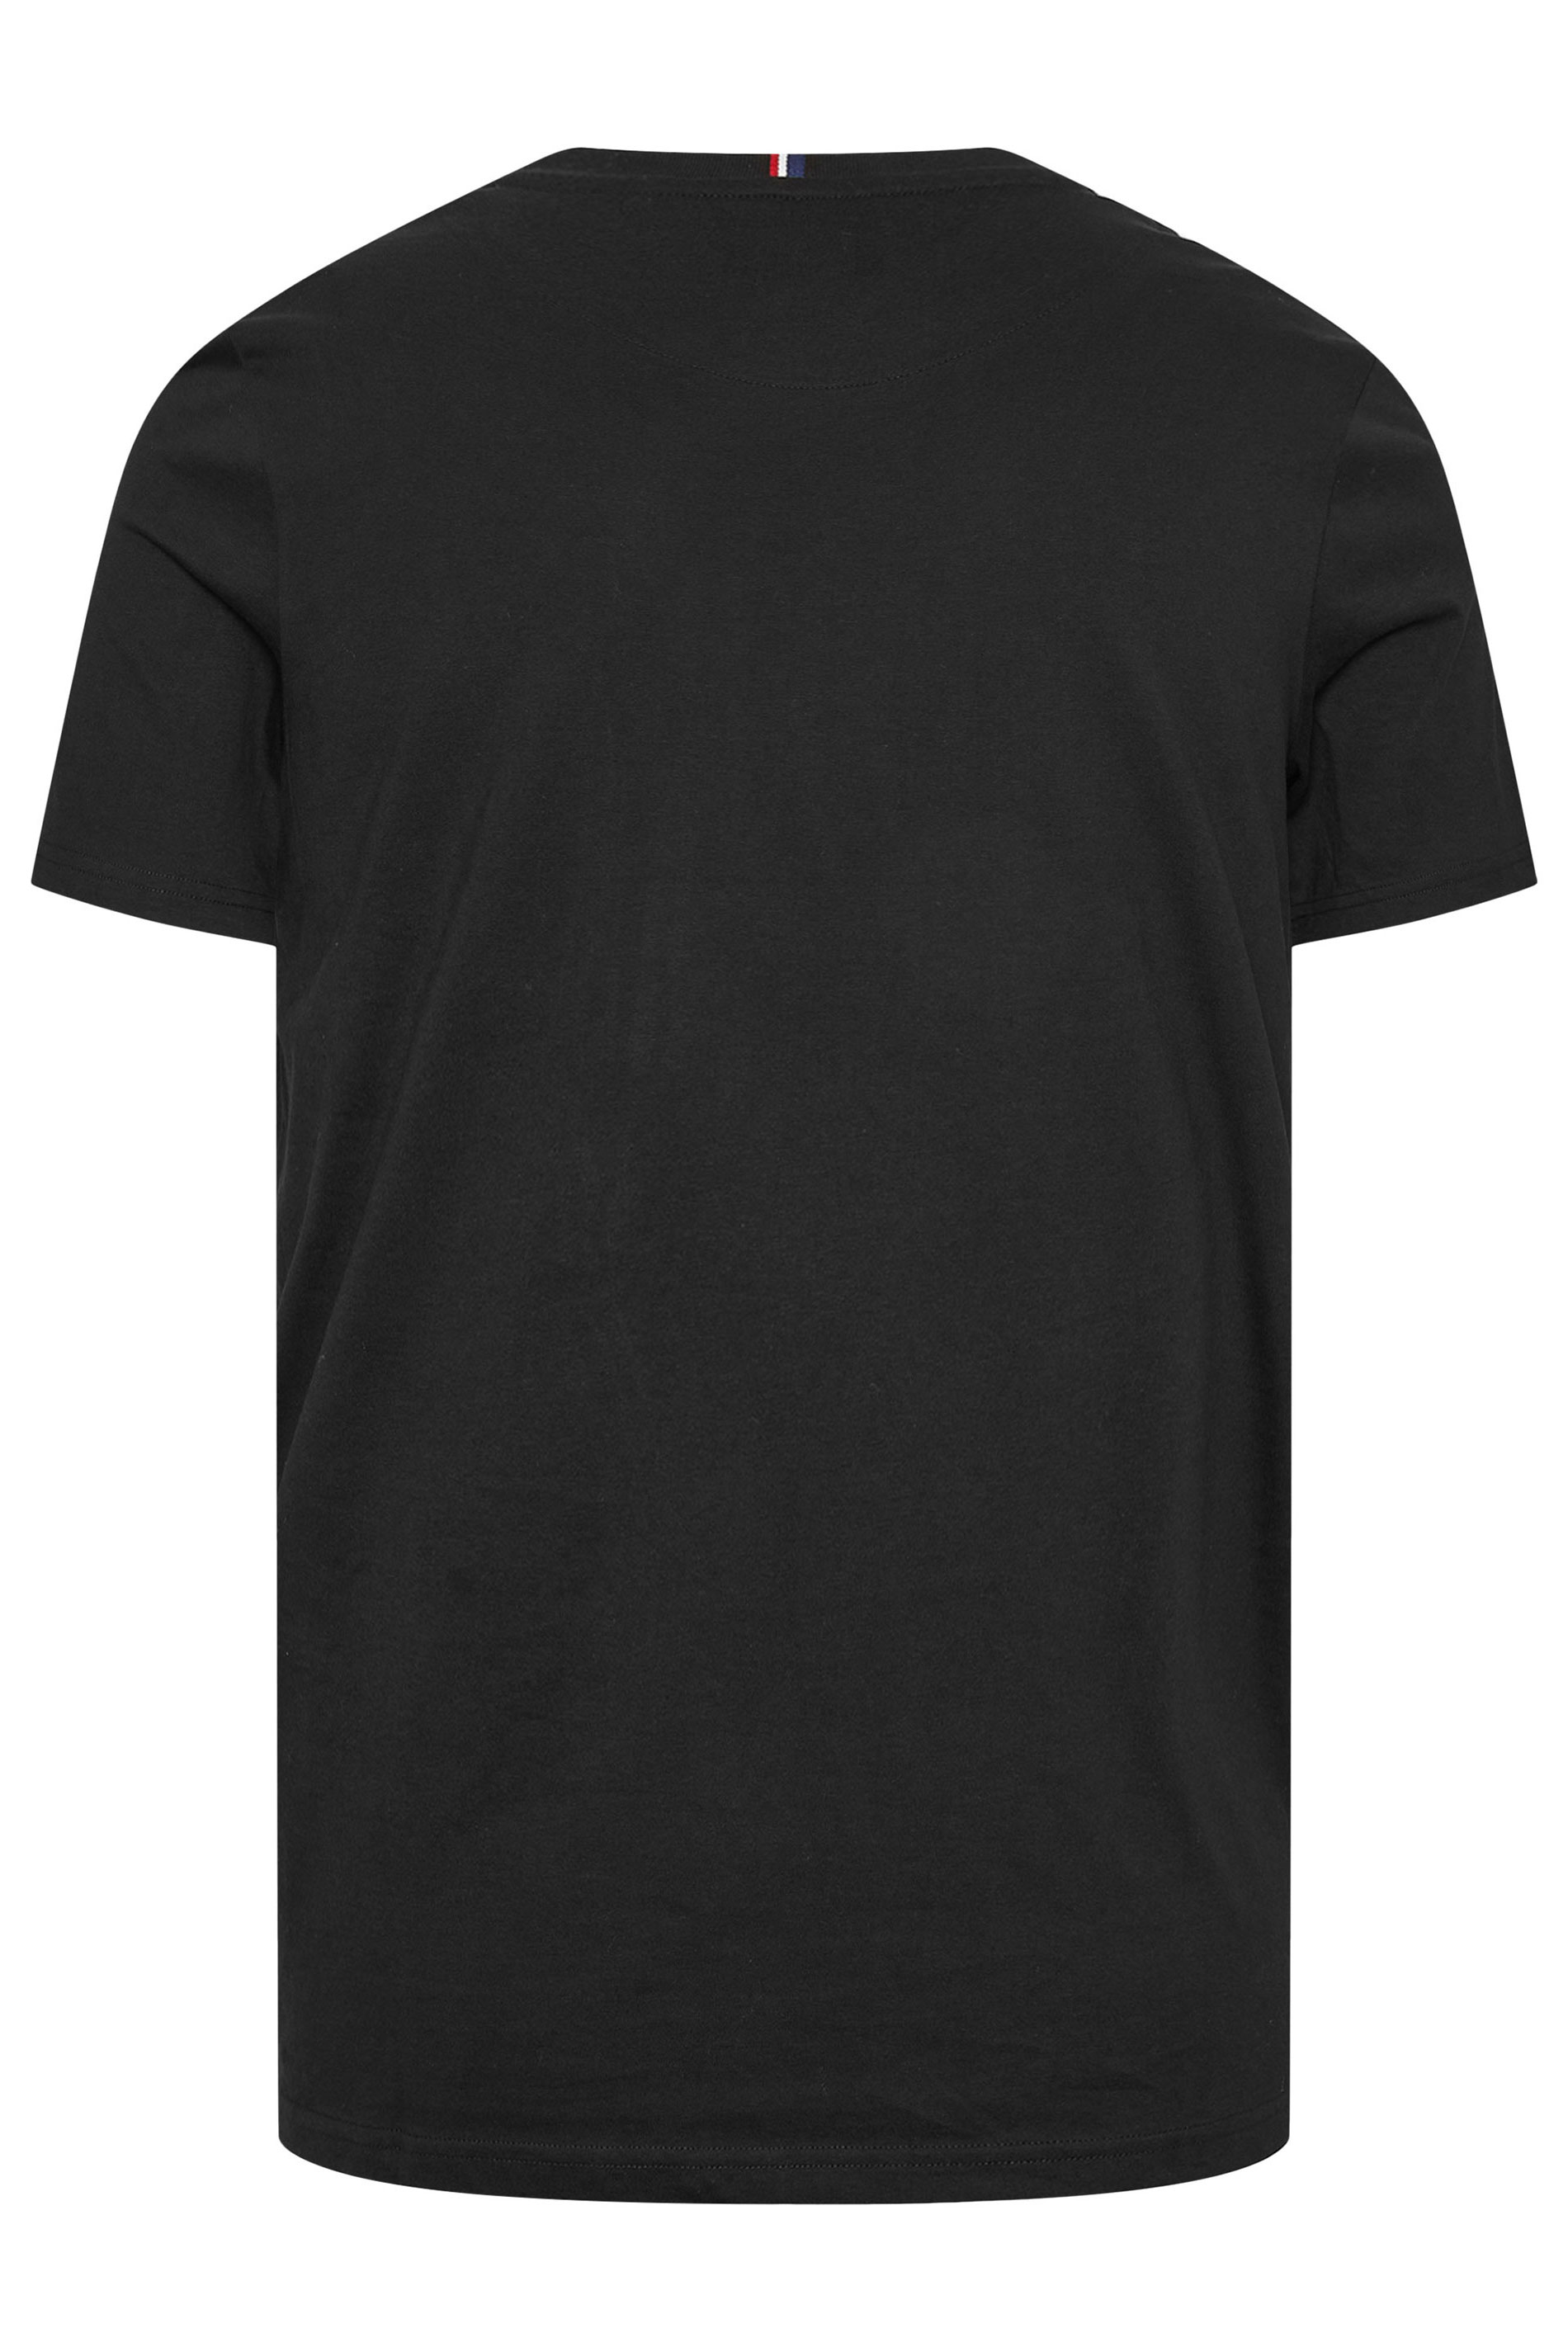 U.S. POLO ASSN. Big & Tall Black Short Sleeve T-Shirt | BadRhino 3